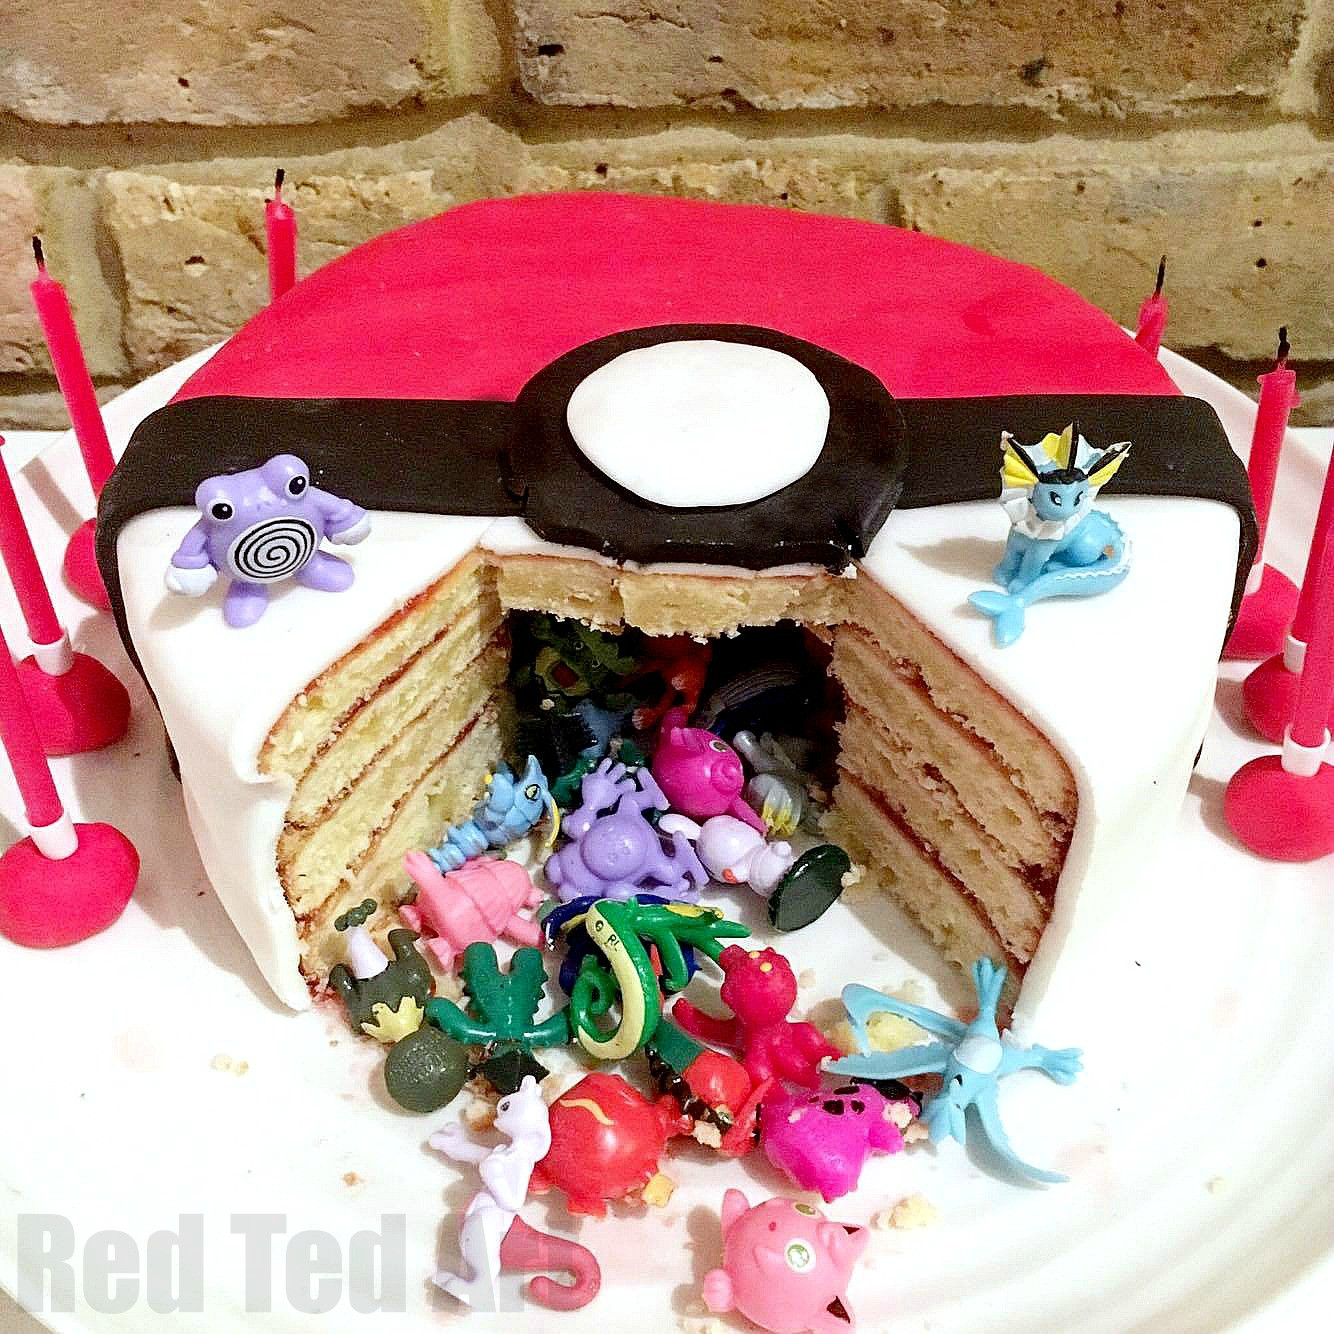 Best ideas about DIY Birthday Cake
. Save or Pin DIY Pokemon Cake Surprise Pinata Pokeball Cake Red Ted Now.